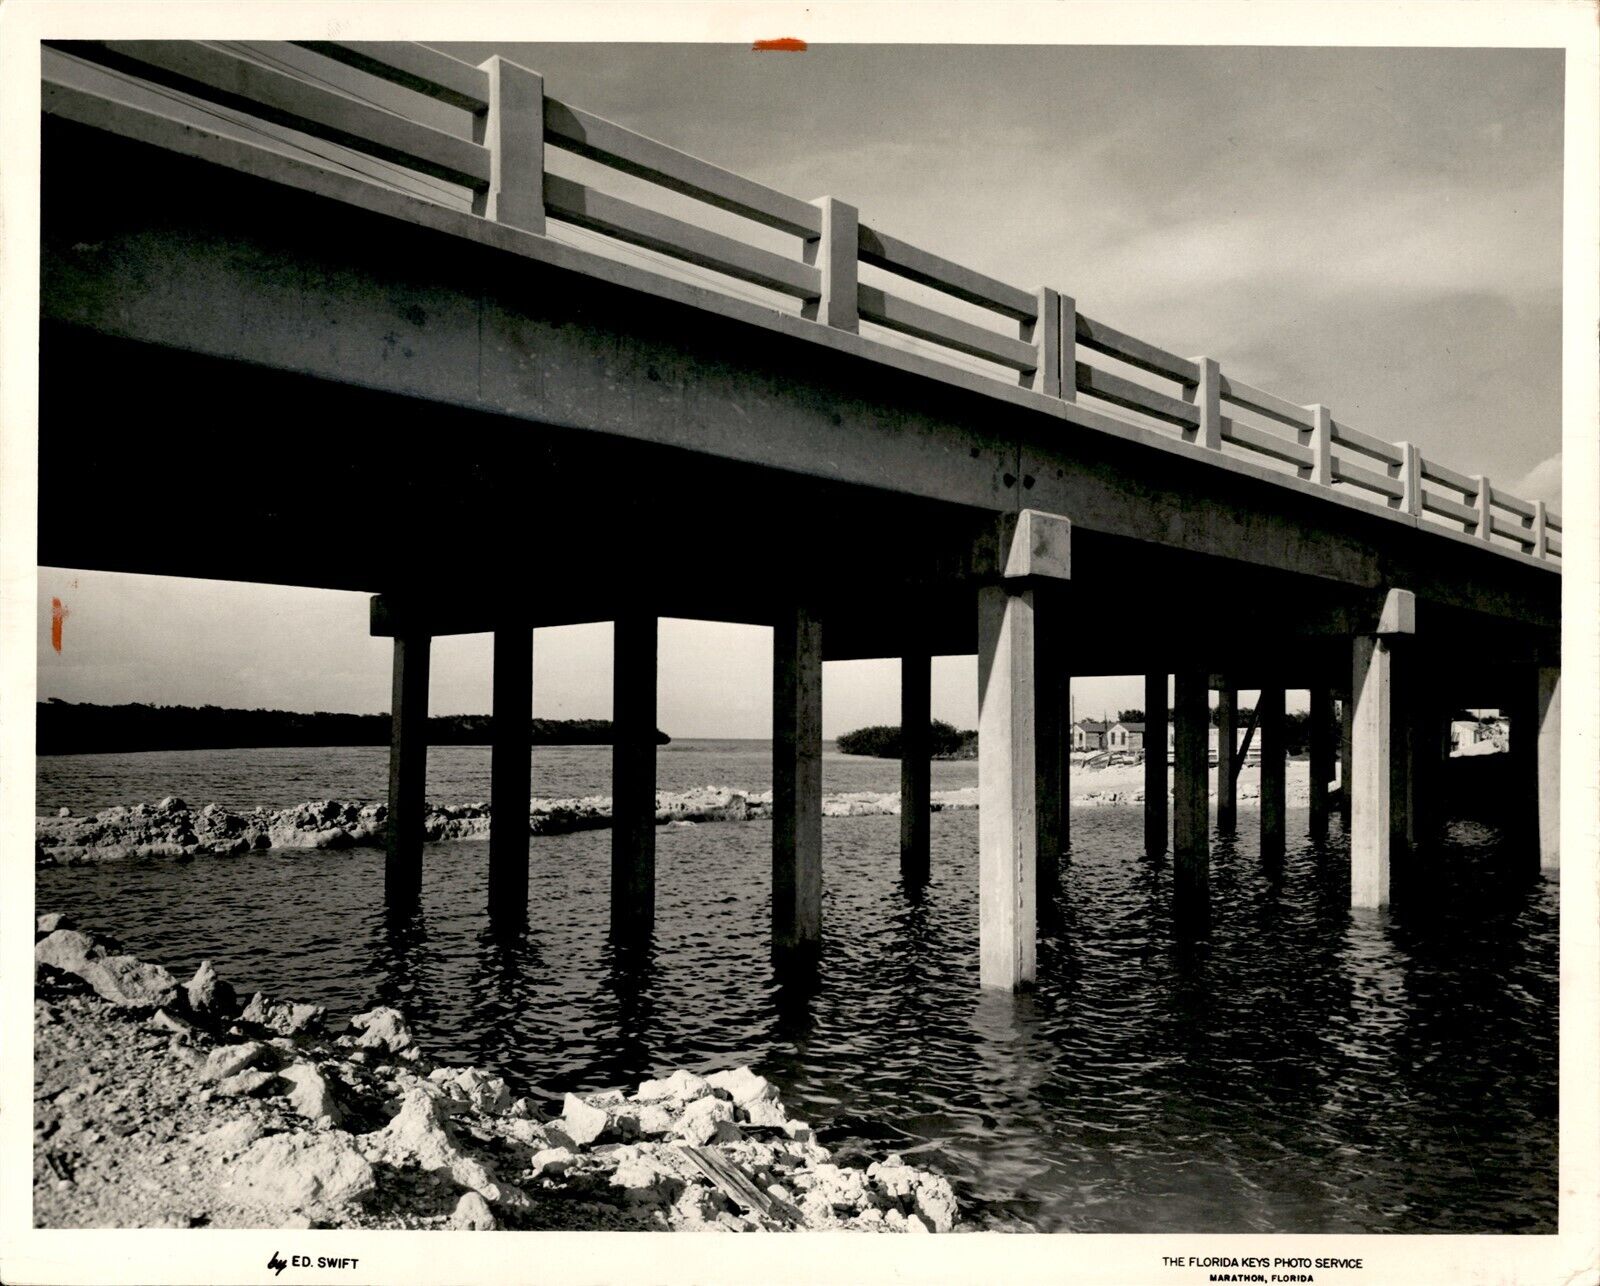 LG76 1956 Original Photo SECTION OF SEVEN MILE BRIDGE IN MARATHON FLORIDA KEYS